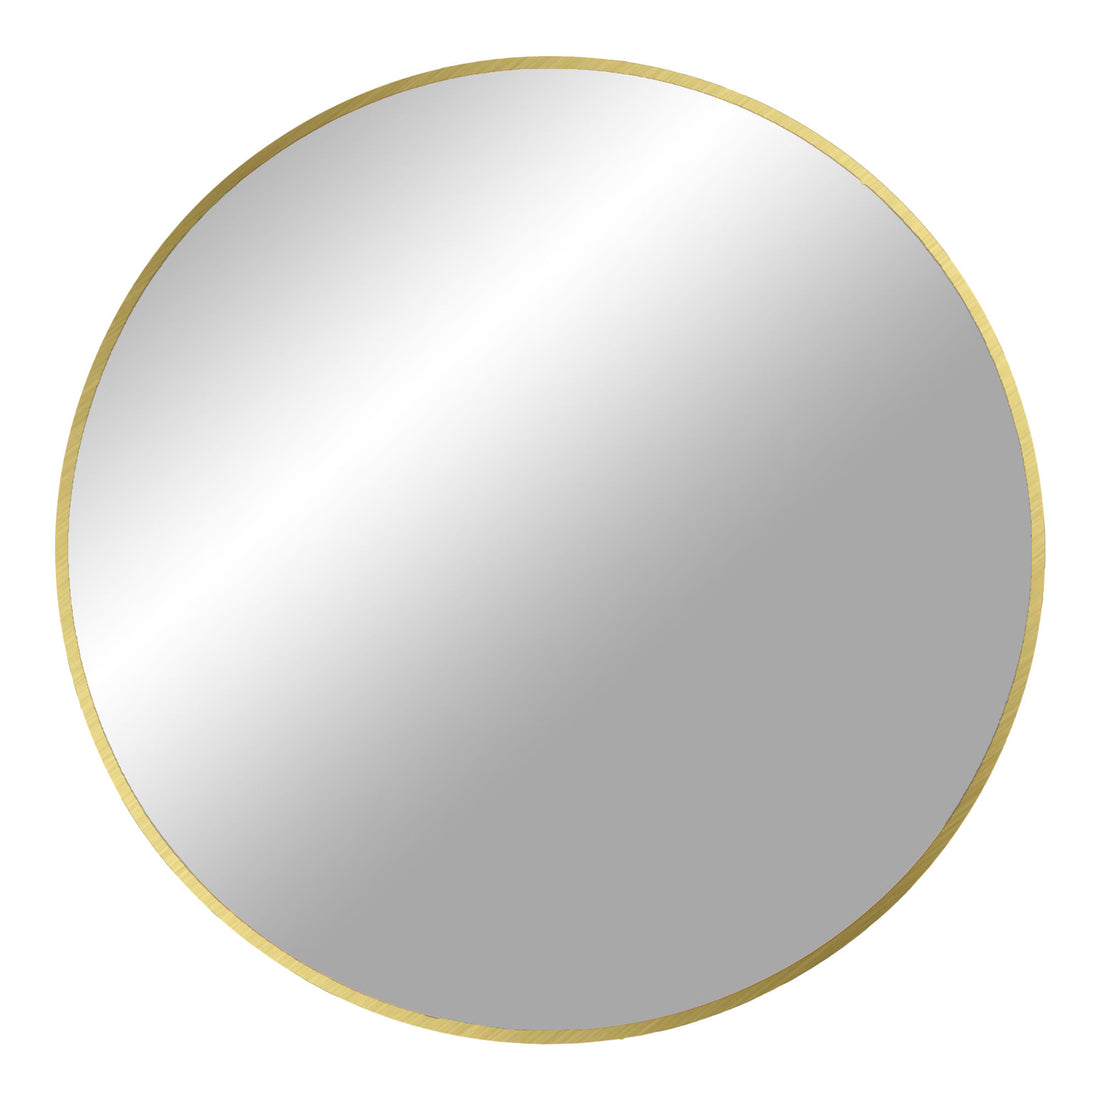 Madrid mirror - mirror in aluminum, brass look, Ø80 cm - 1 - pcs